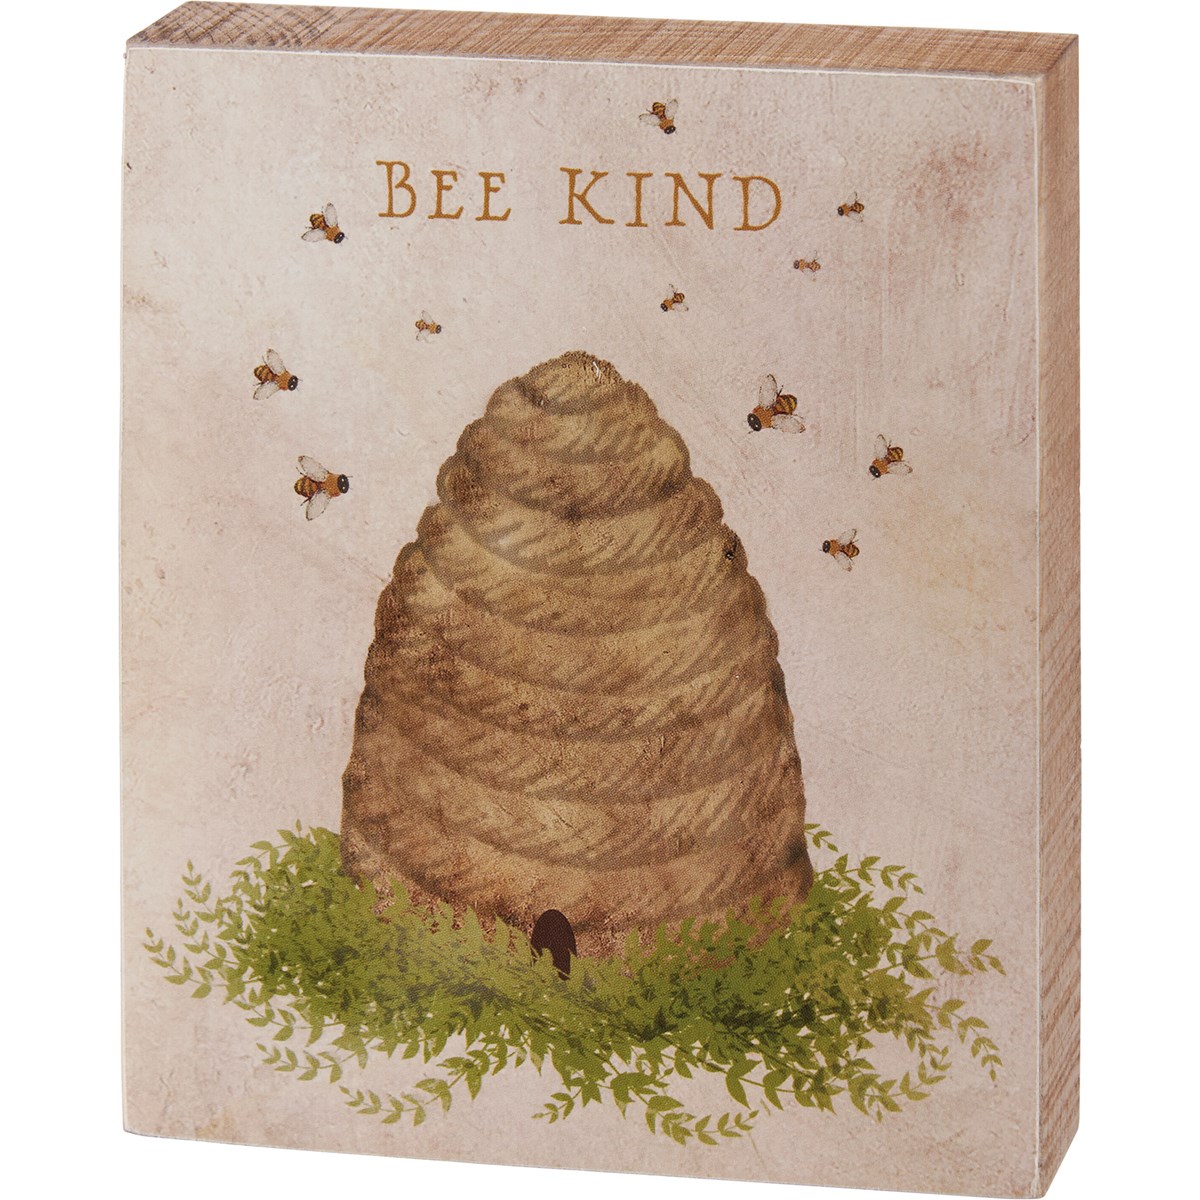 Bee Kind Primitive Block Sign - Wood, Paper